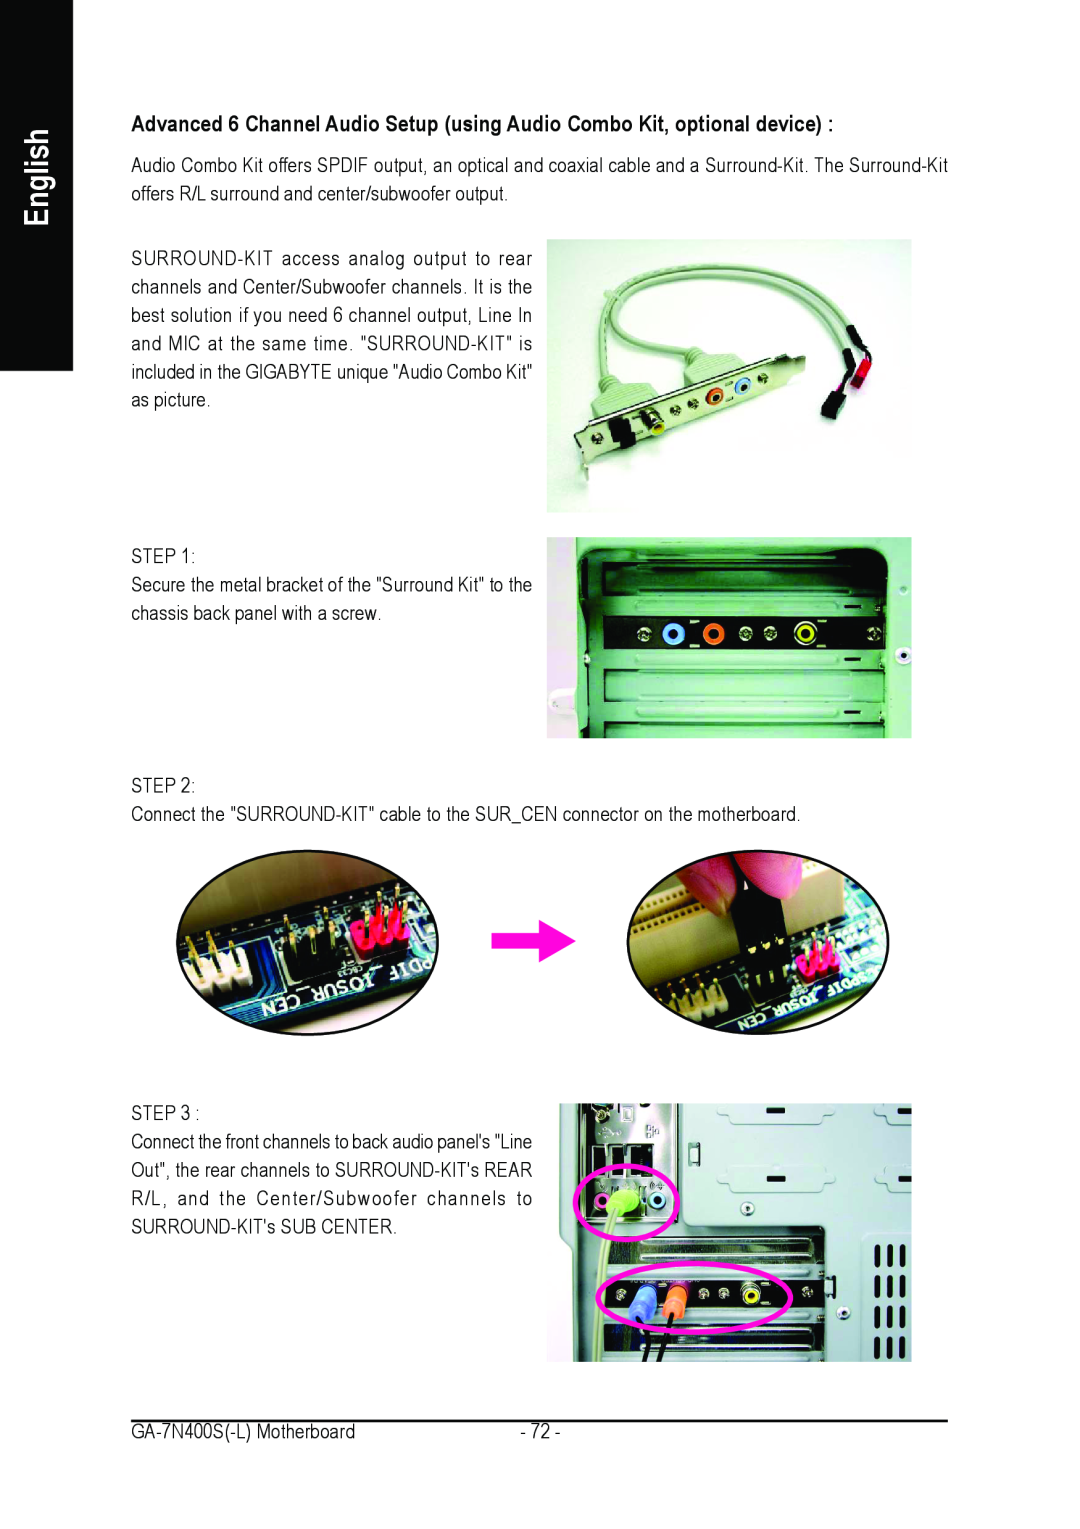 Gigabyte GA-7N400S-L user manual Advanced 6 Channel Audio Setup using Audio Combo Kit, optional device, English 